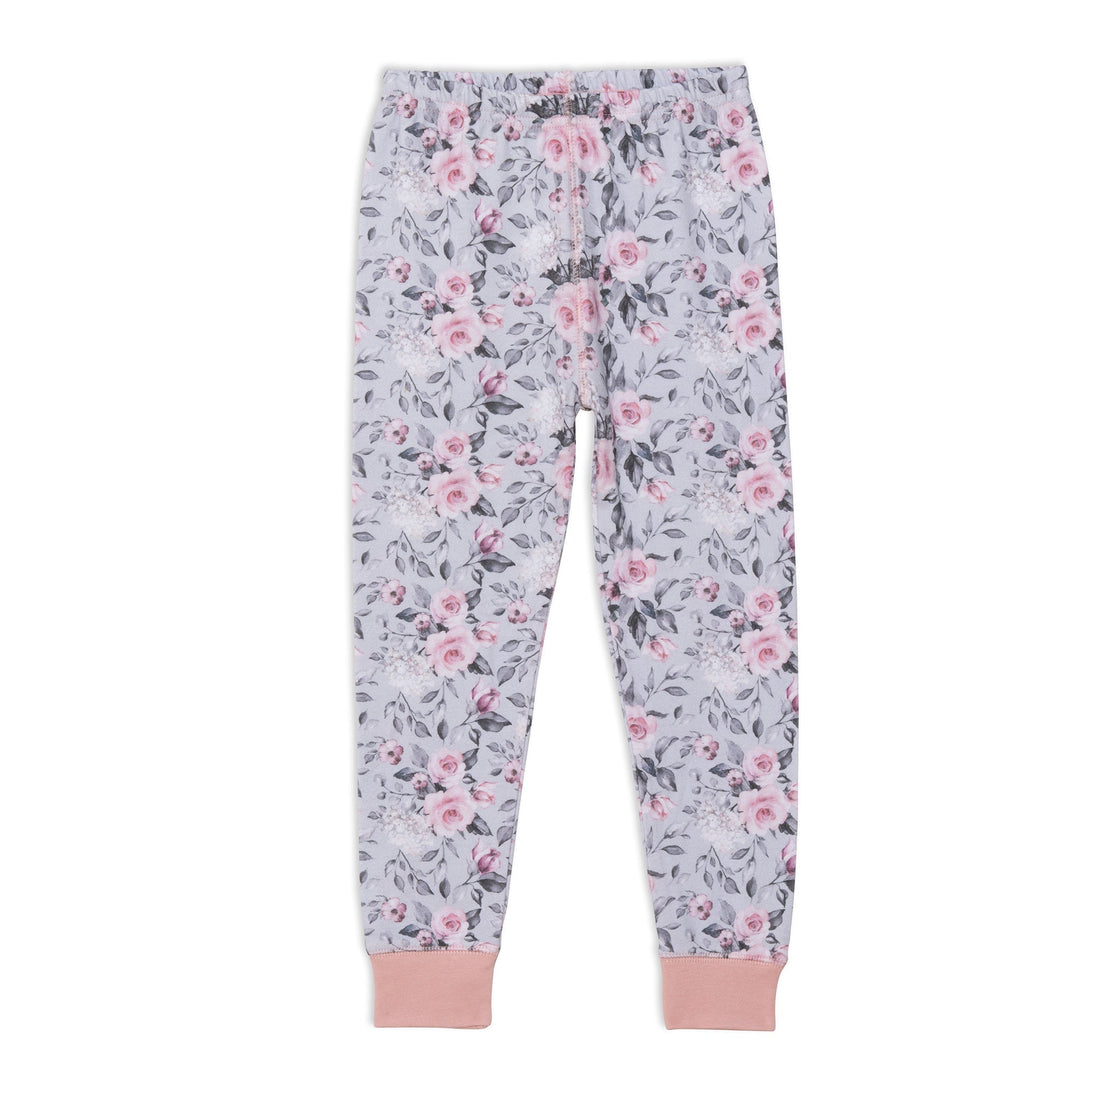 Organic Cotton Two Piece Printed Pajama Set Grey With Roses